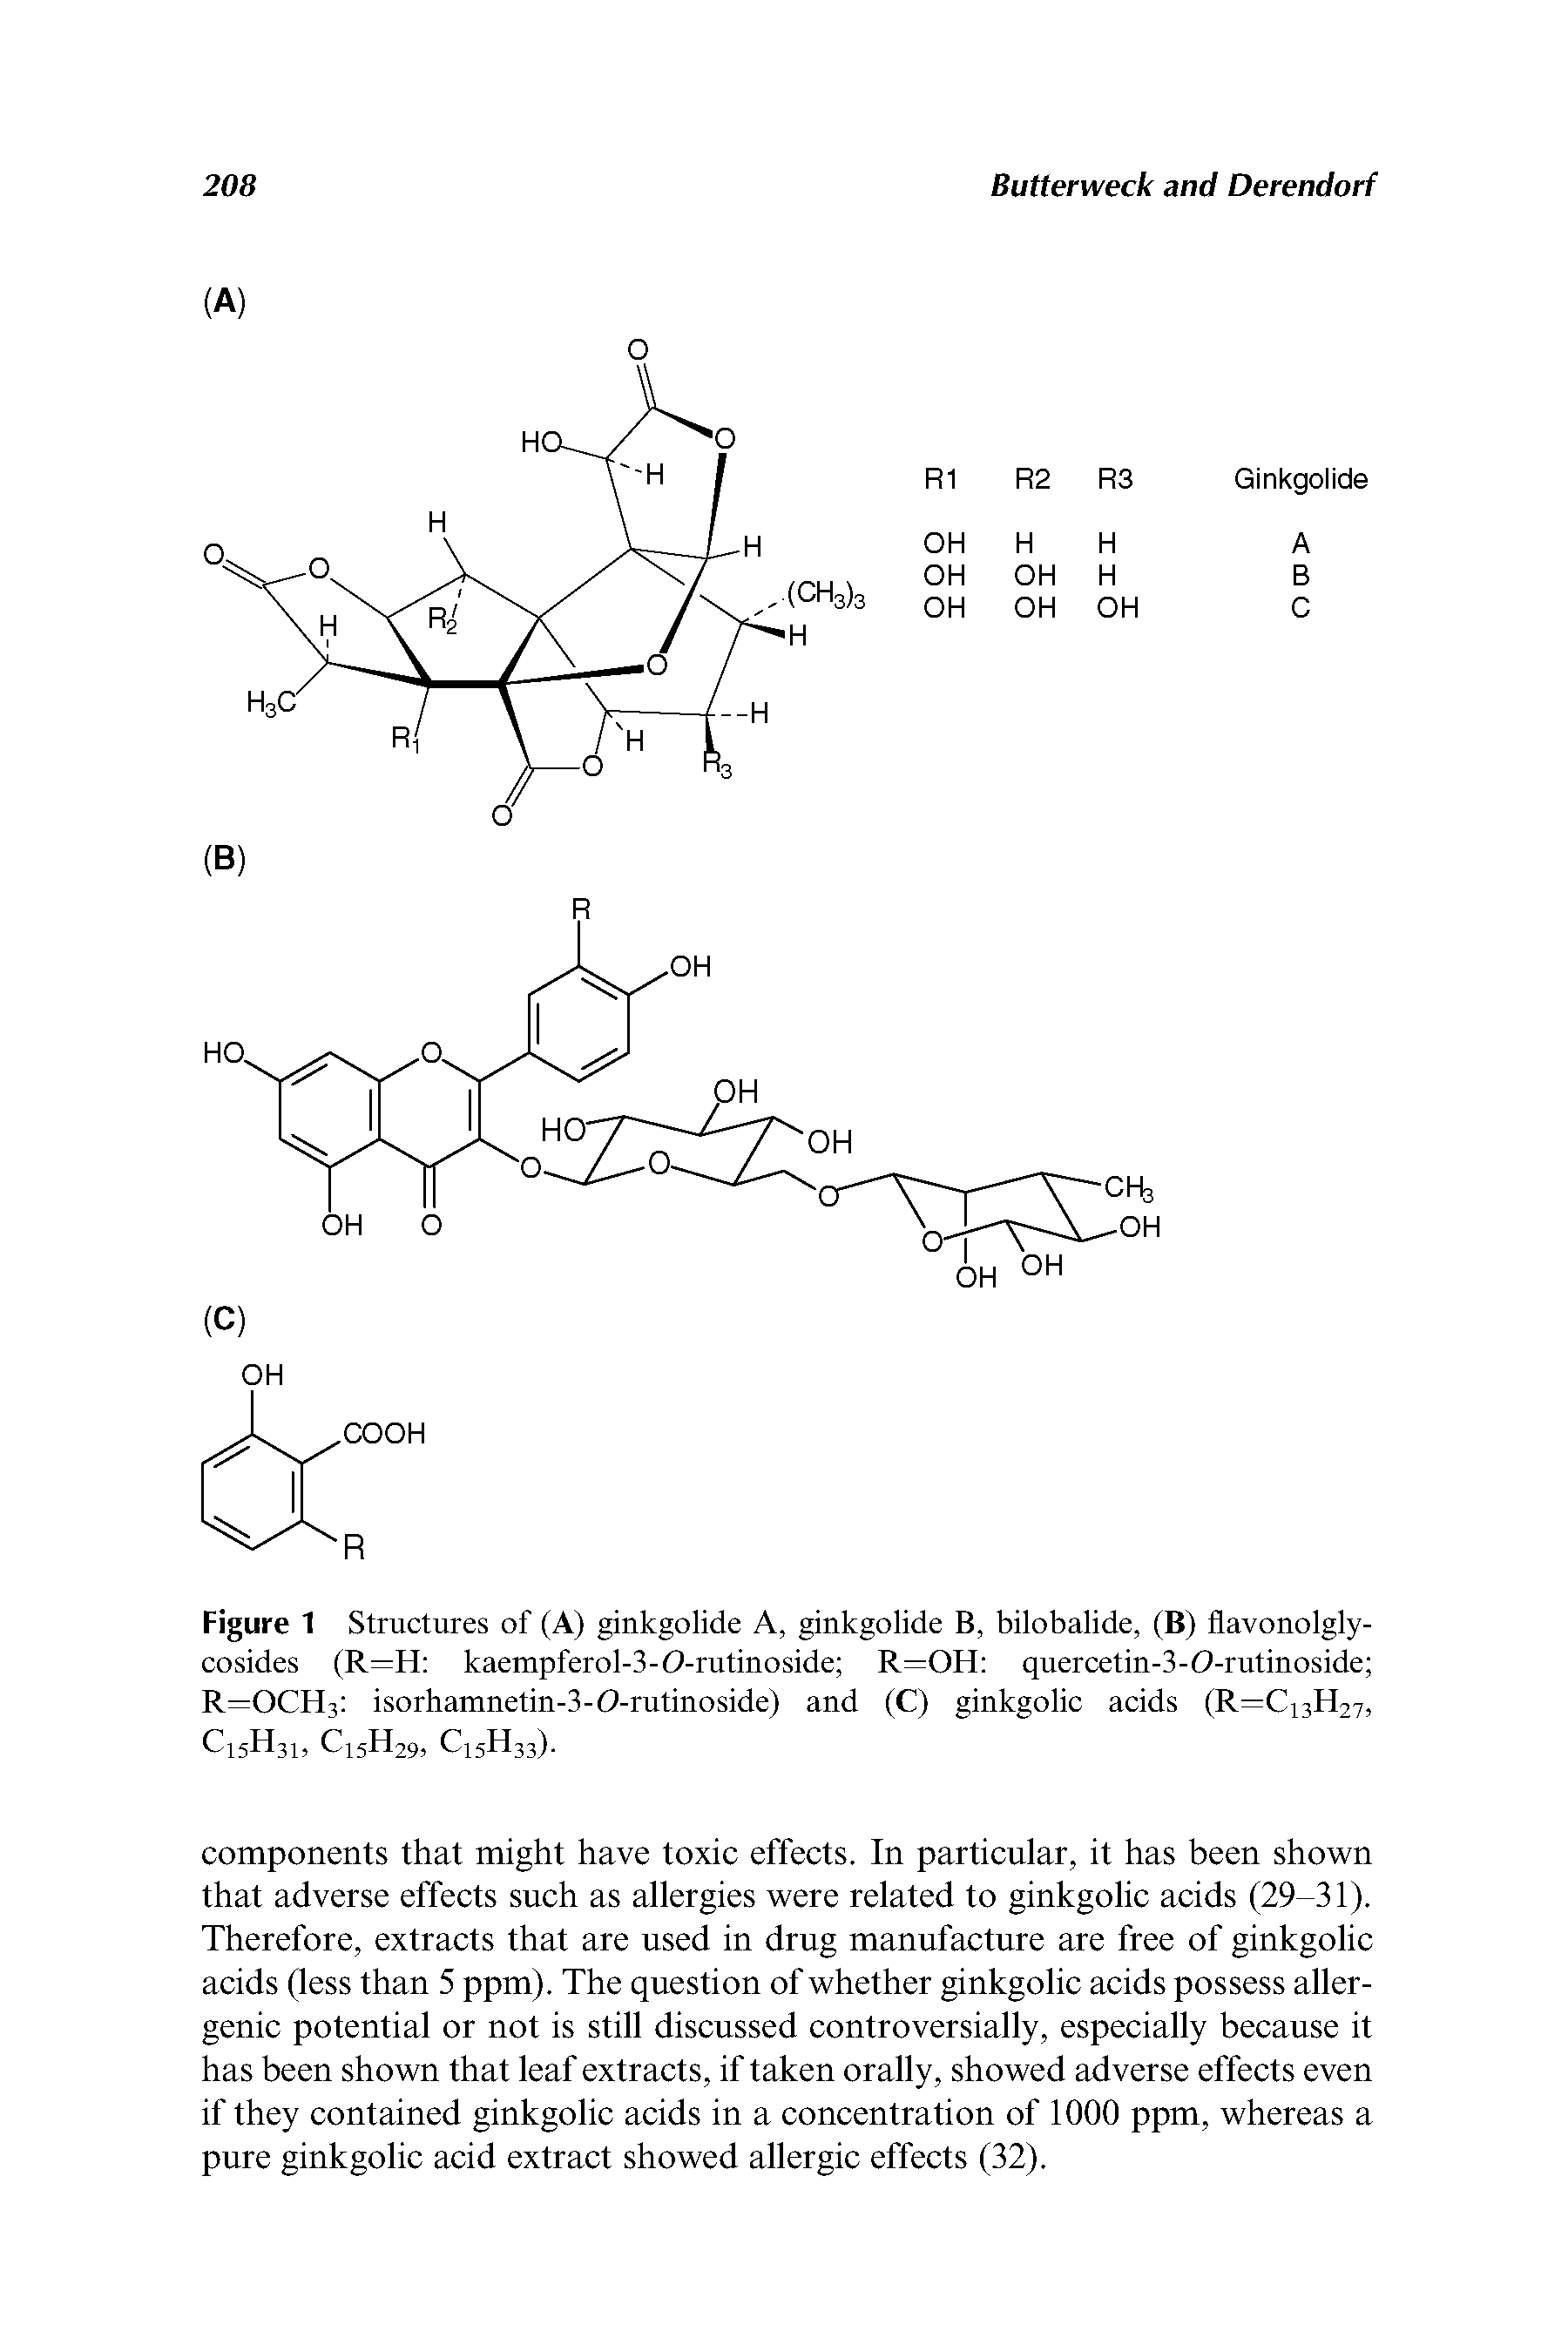 Figure 1 Structures of (A) ginkgolide A, ginkgolide B, bilobalide, (B) flavonolgly-cosides (R=H kaempferol-3-O-rutinoside R=OH quercetin-3-O-rutinoside R=0CH3 isorhamnetin-3-O-rutinoside) and (C) ginkgolic acids (R=Ci3H27, C15H31, C15H29, C15H33).